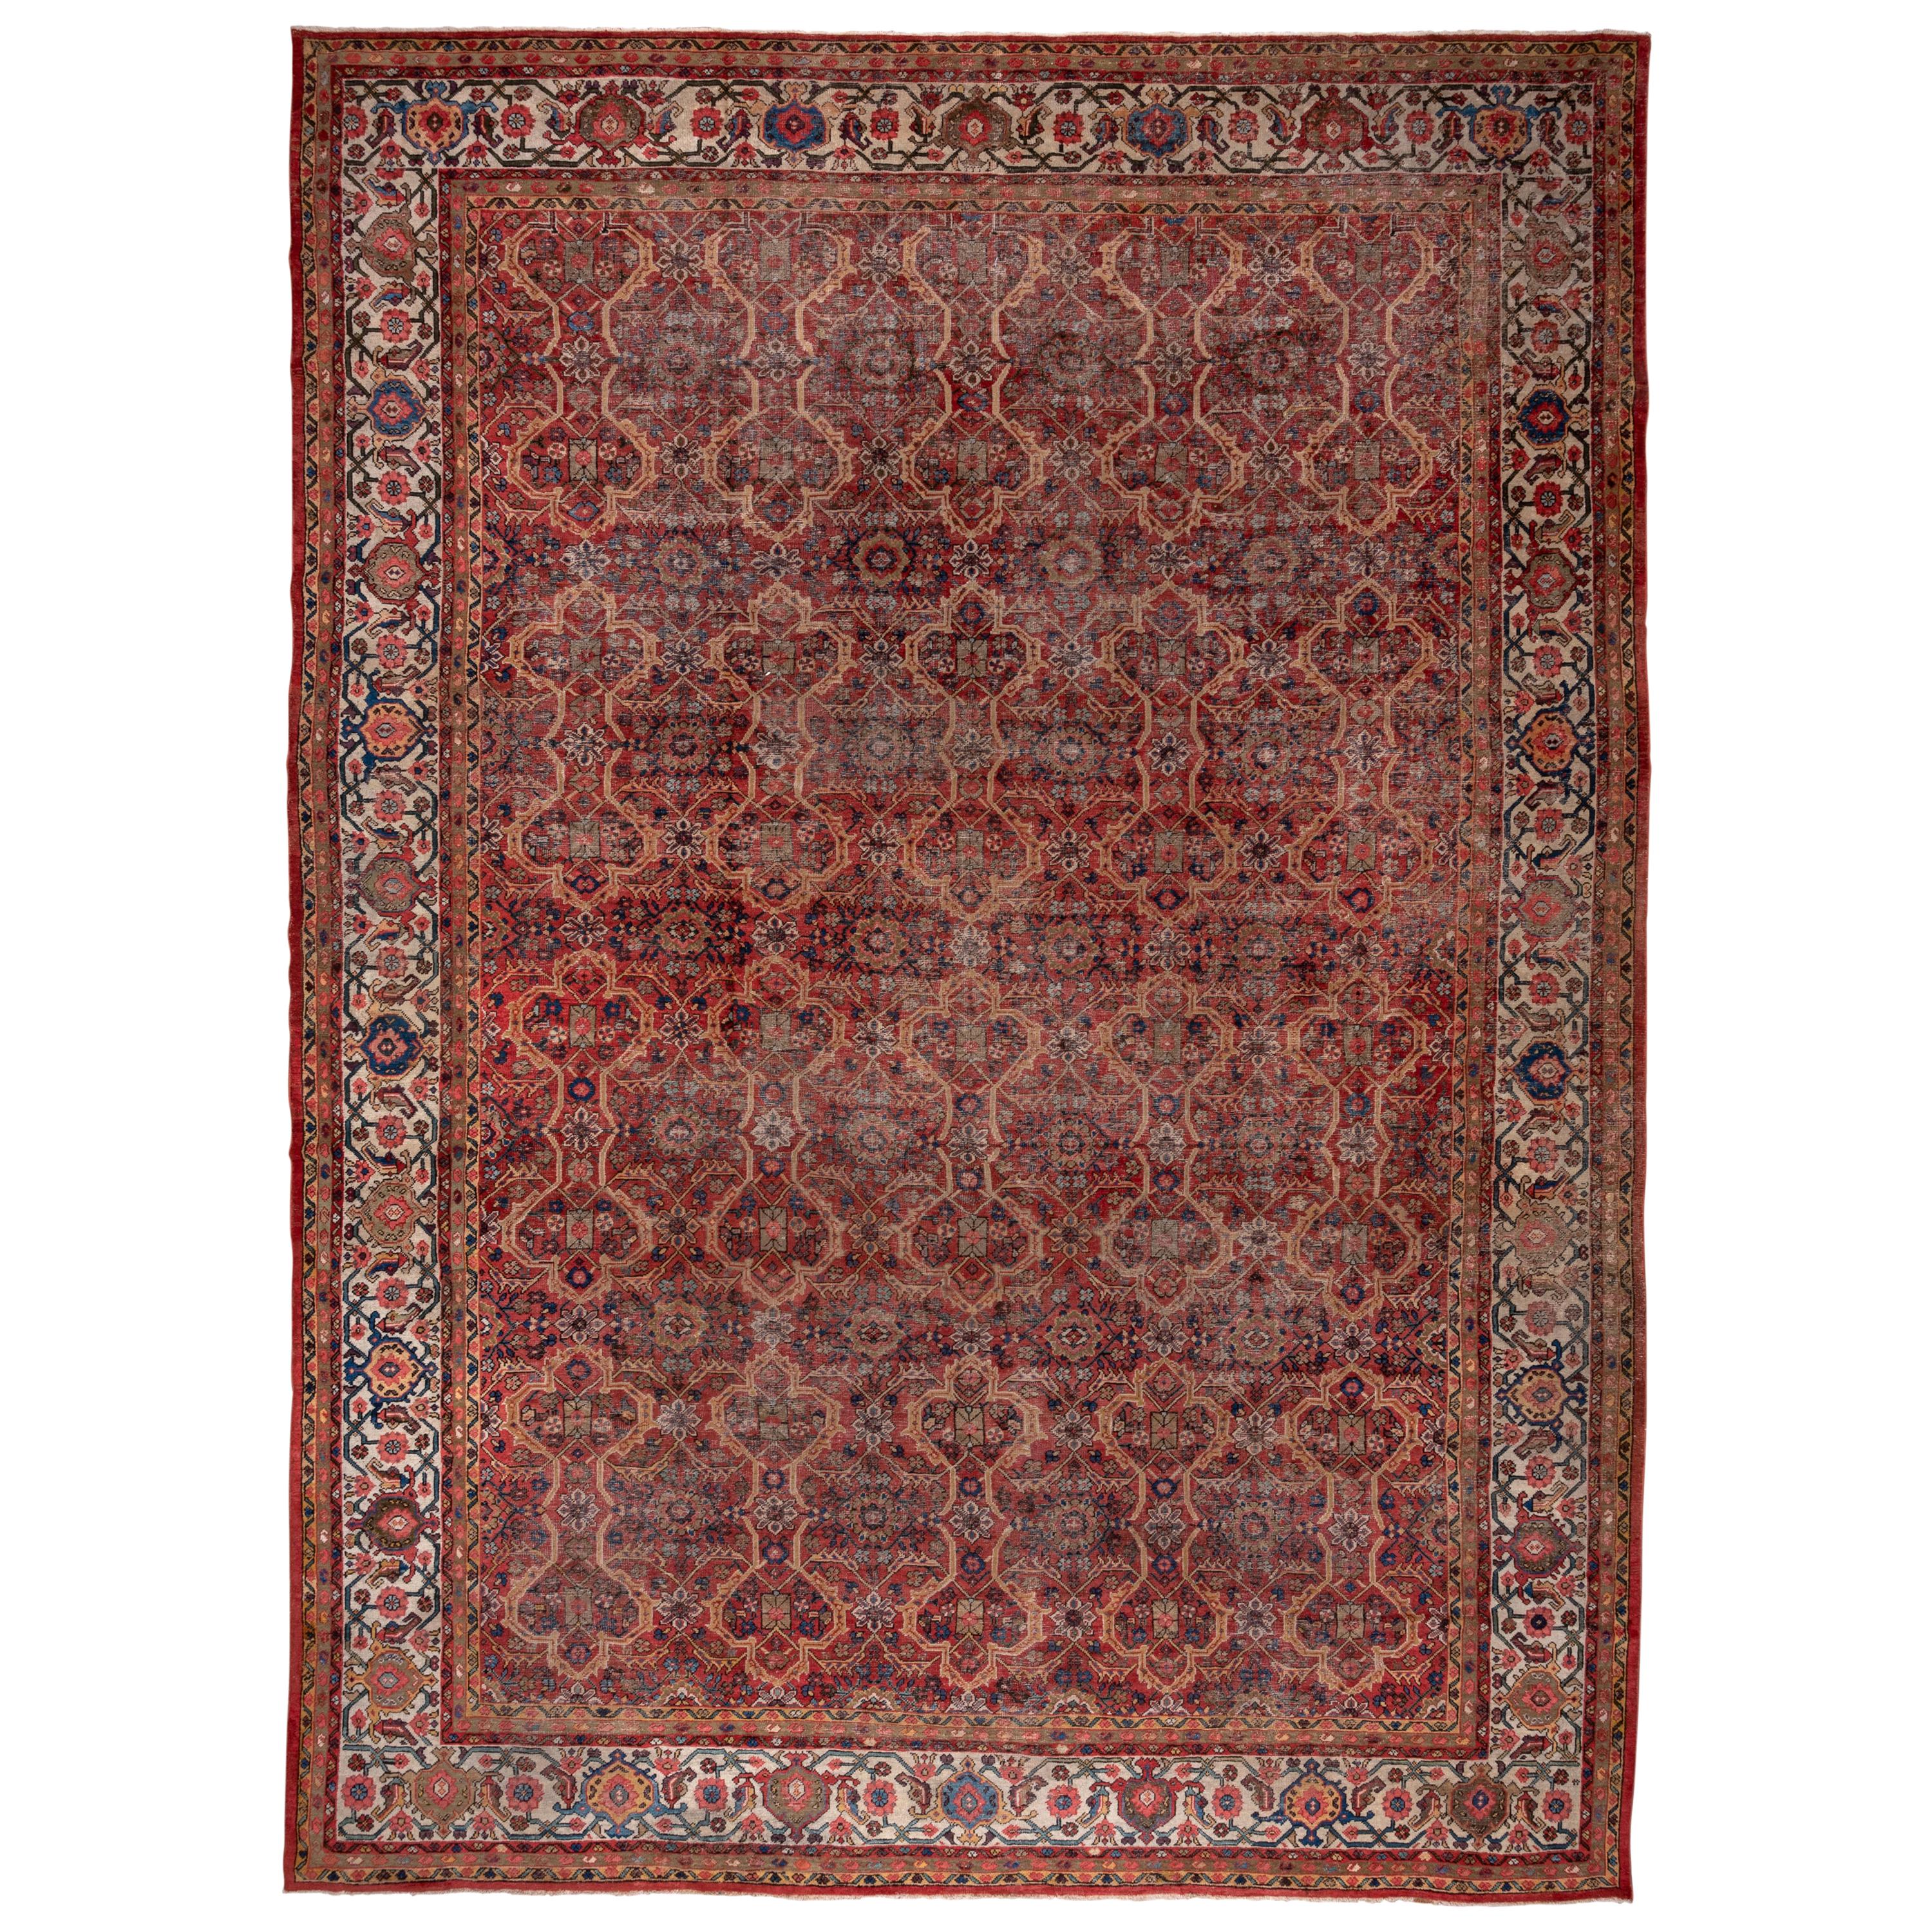 Large Persian Mahal Carpet, Coral Red Field